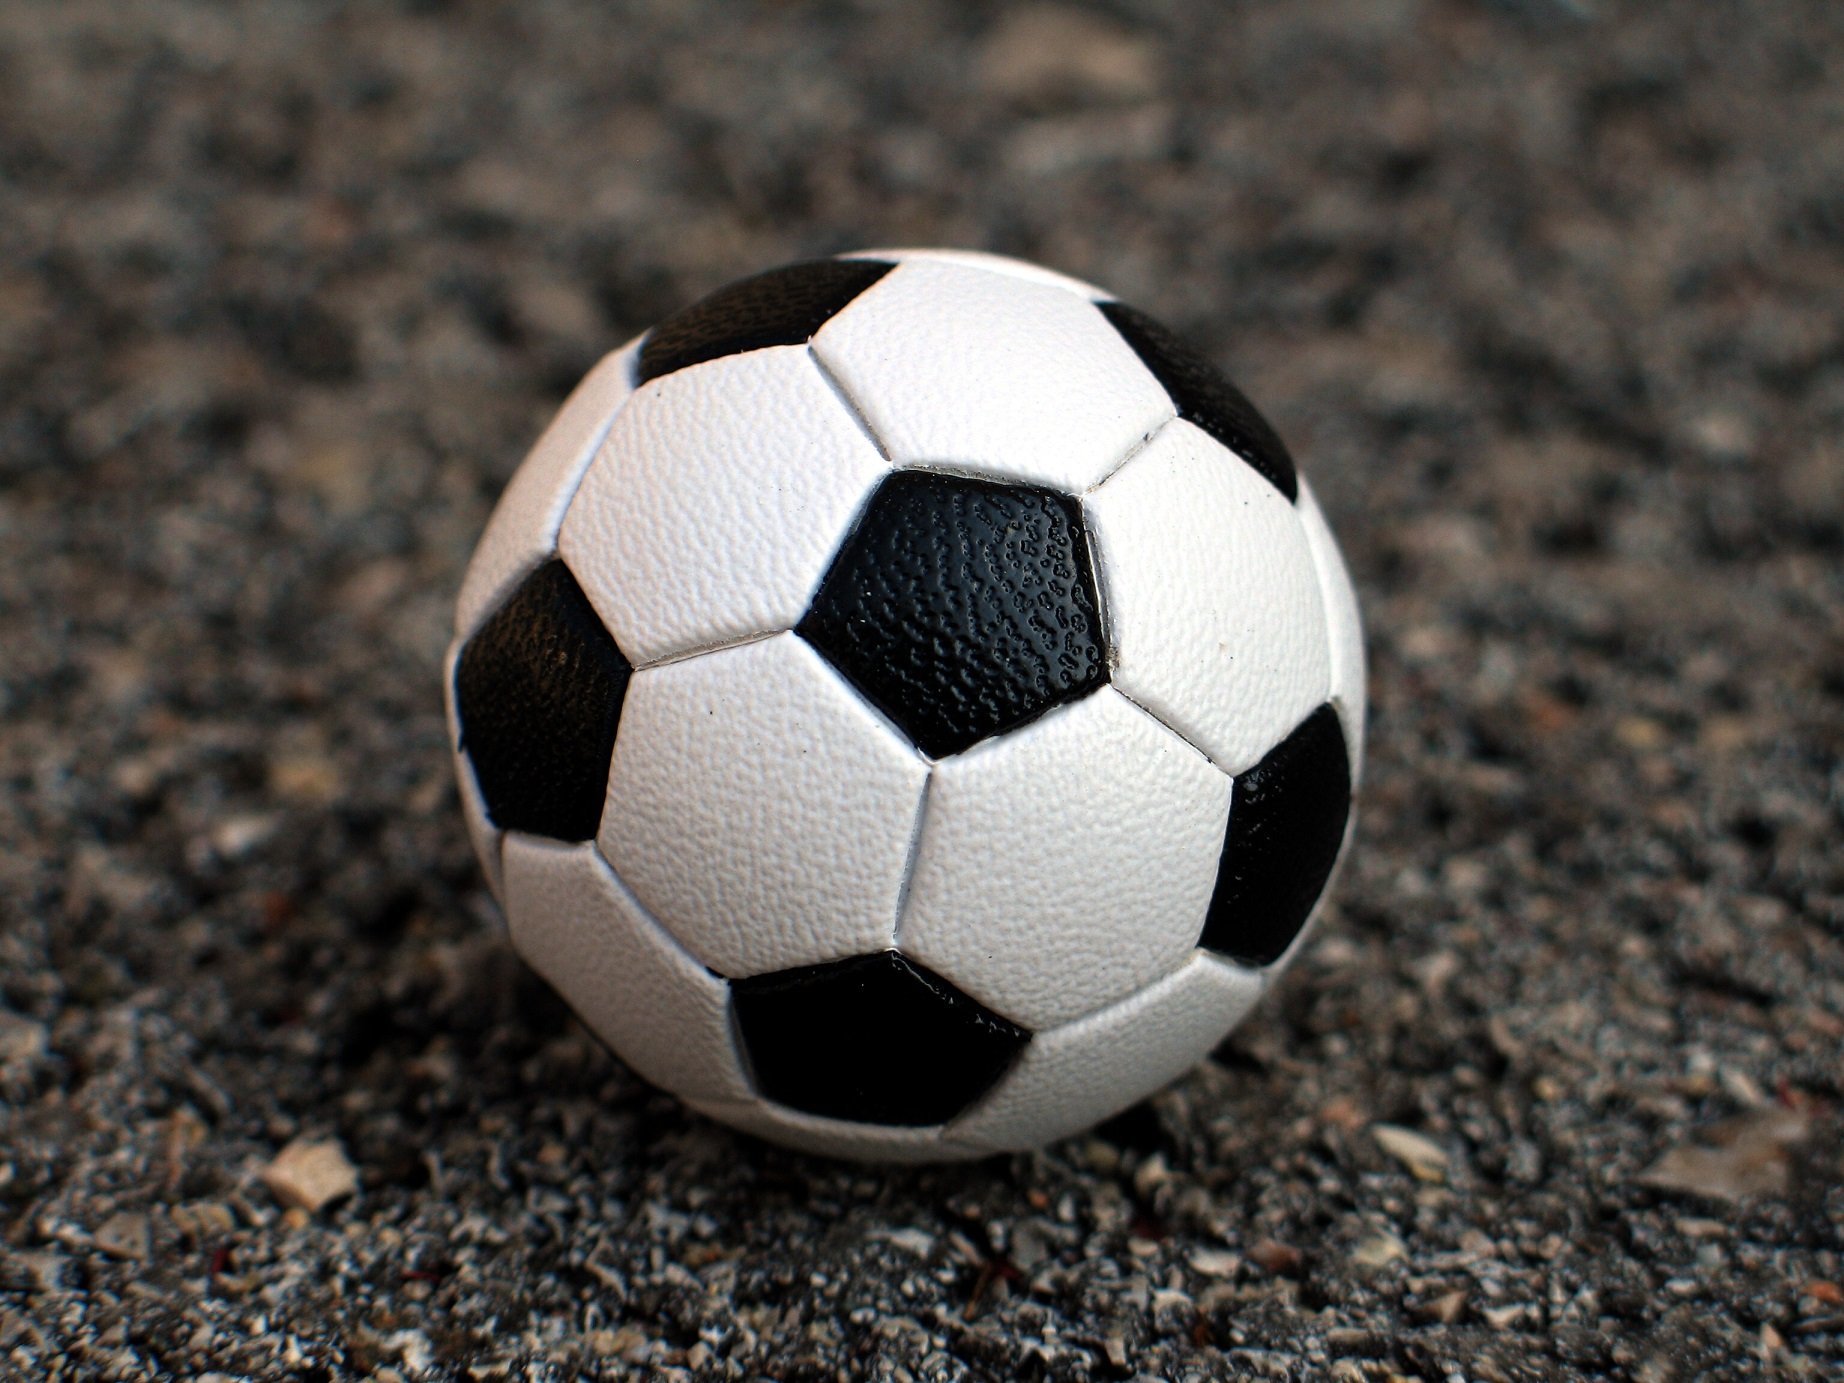 Покажи футбол мяч. Мяч. Мяч "футбол". Красивый футбольный мяч. Футбольный мяч картинка.